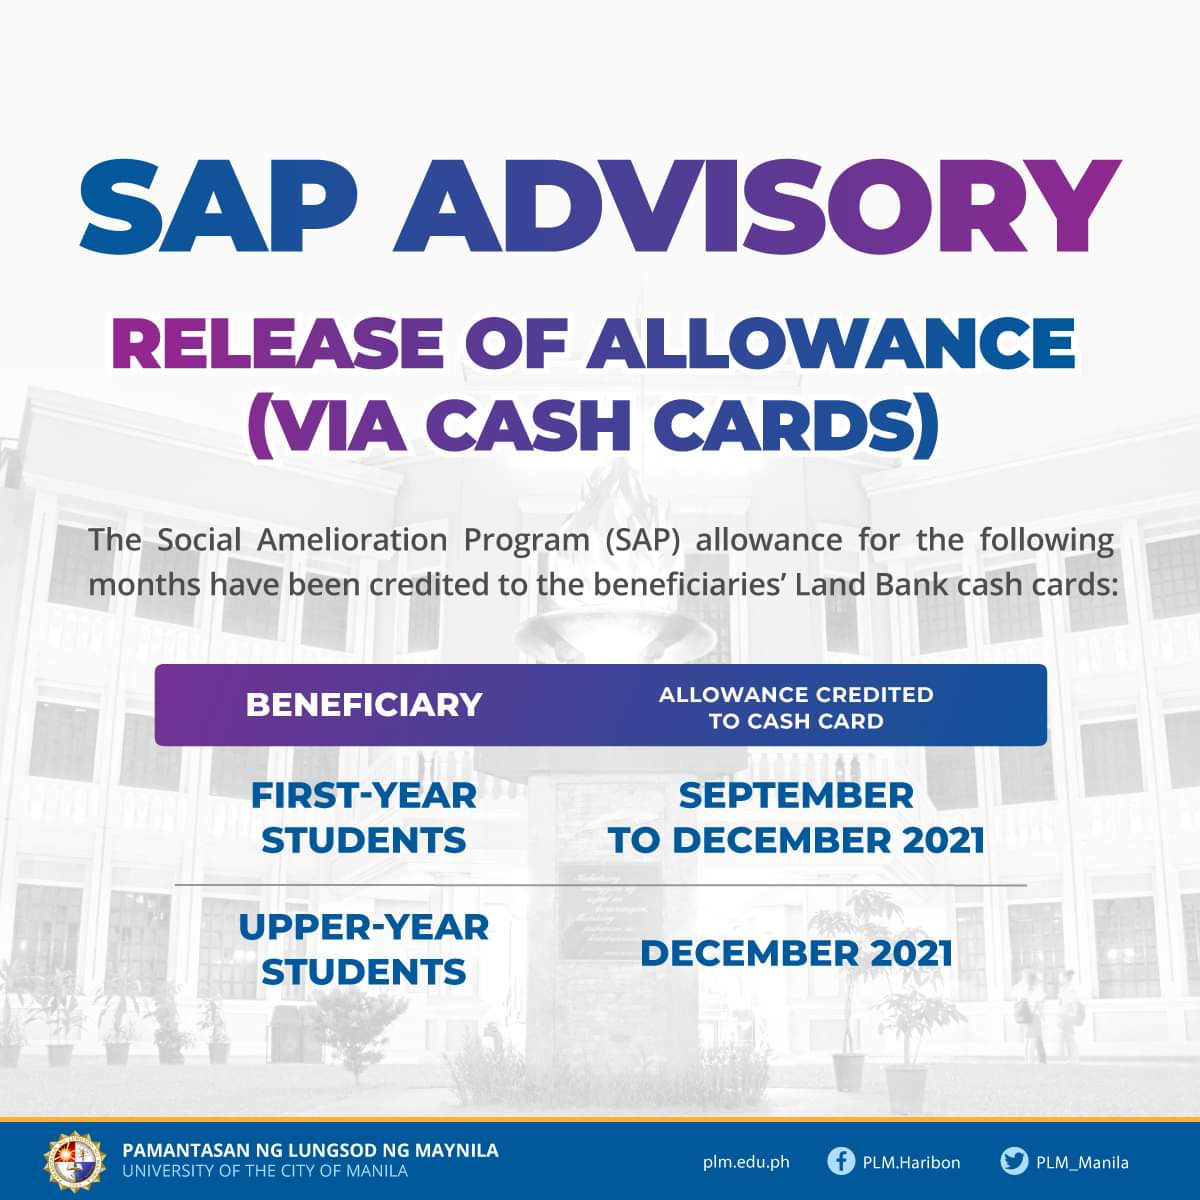 SAP advisory: Release of allowance via cash cards